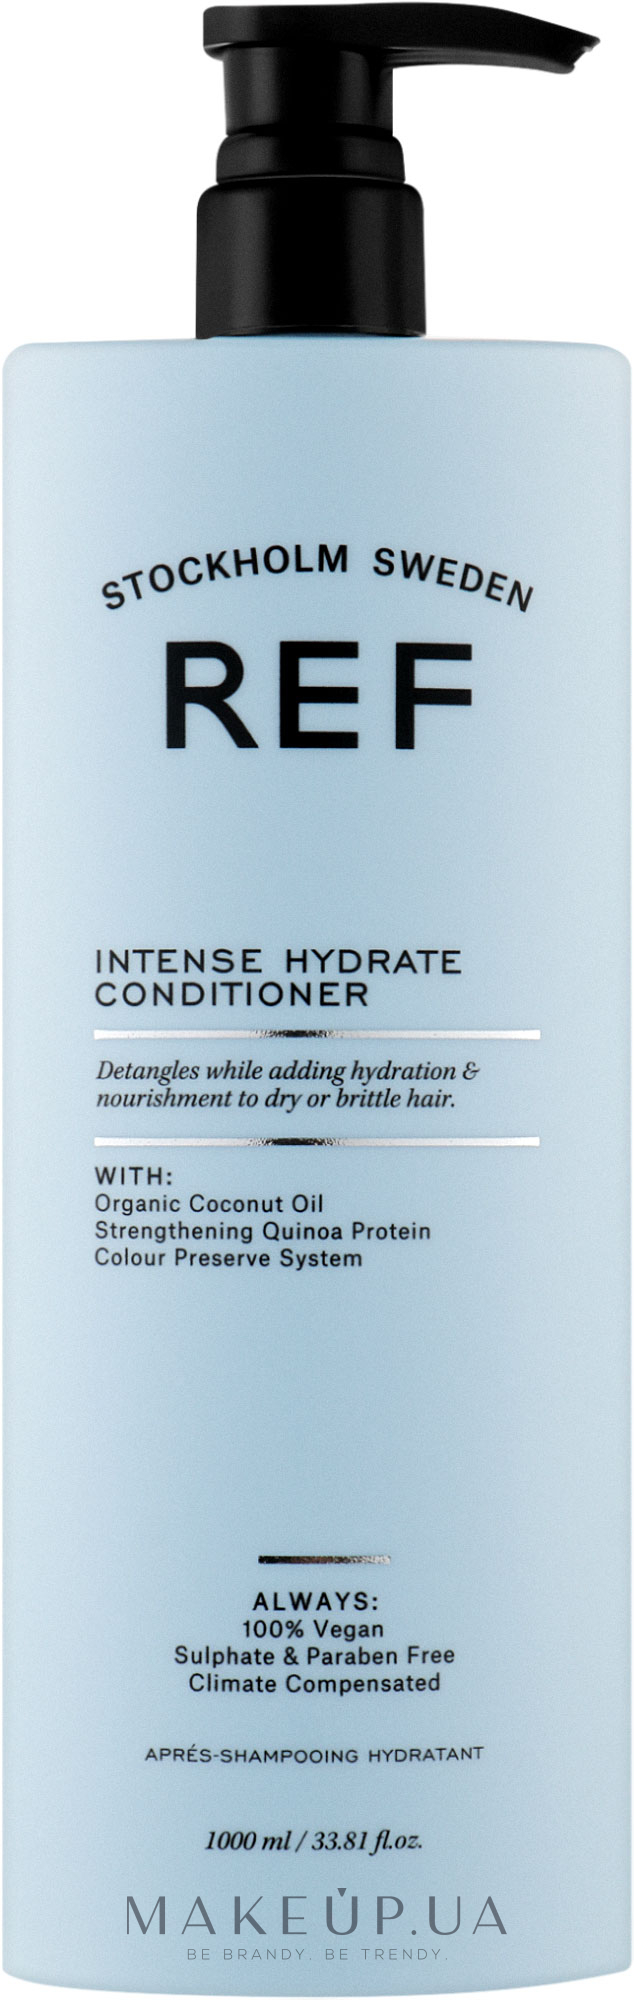 Увлажняющий кондиционер для волос, pH 3.5 - REF Intense Hydrate Conditioner — фото 1000ml